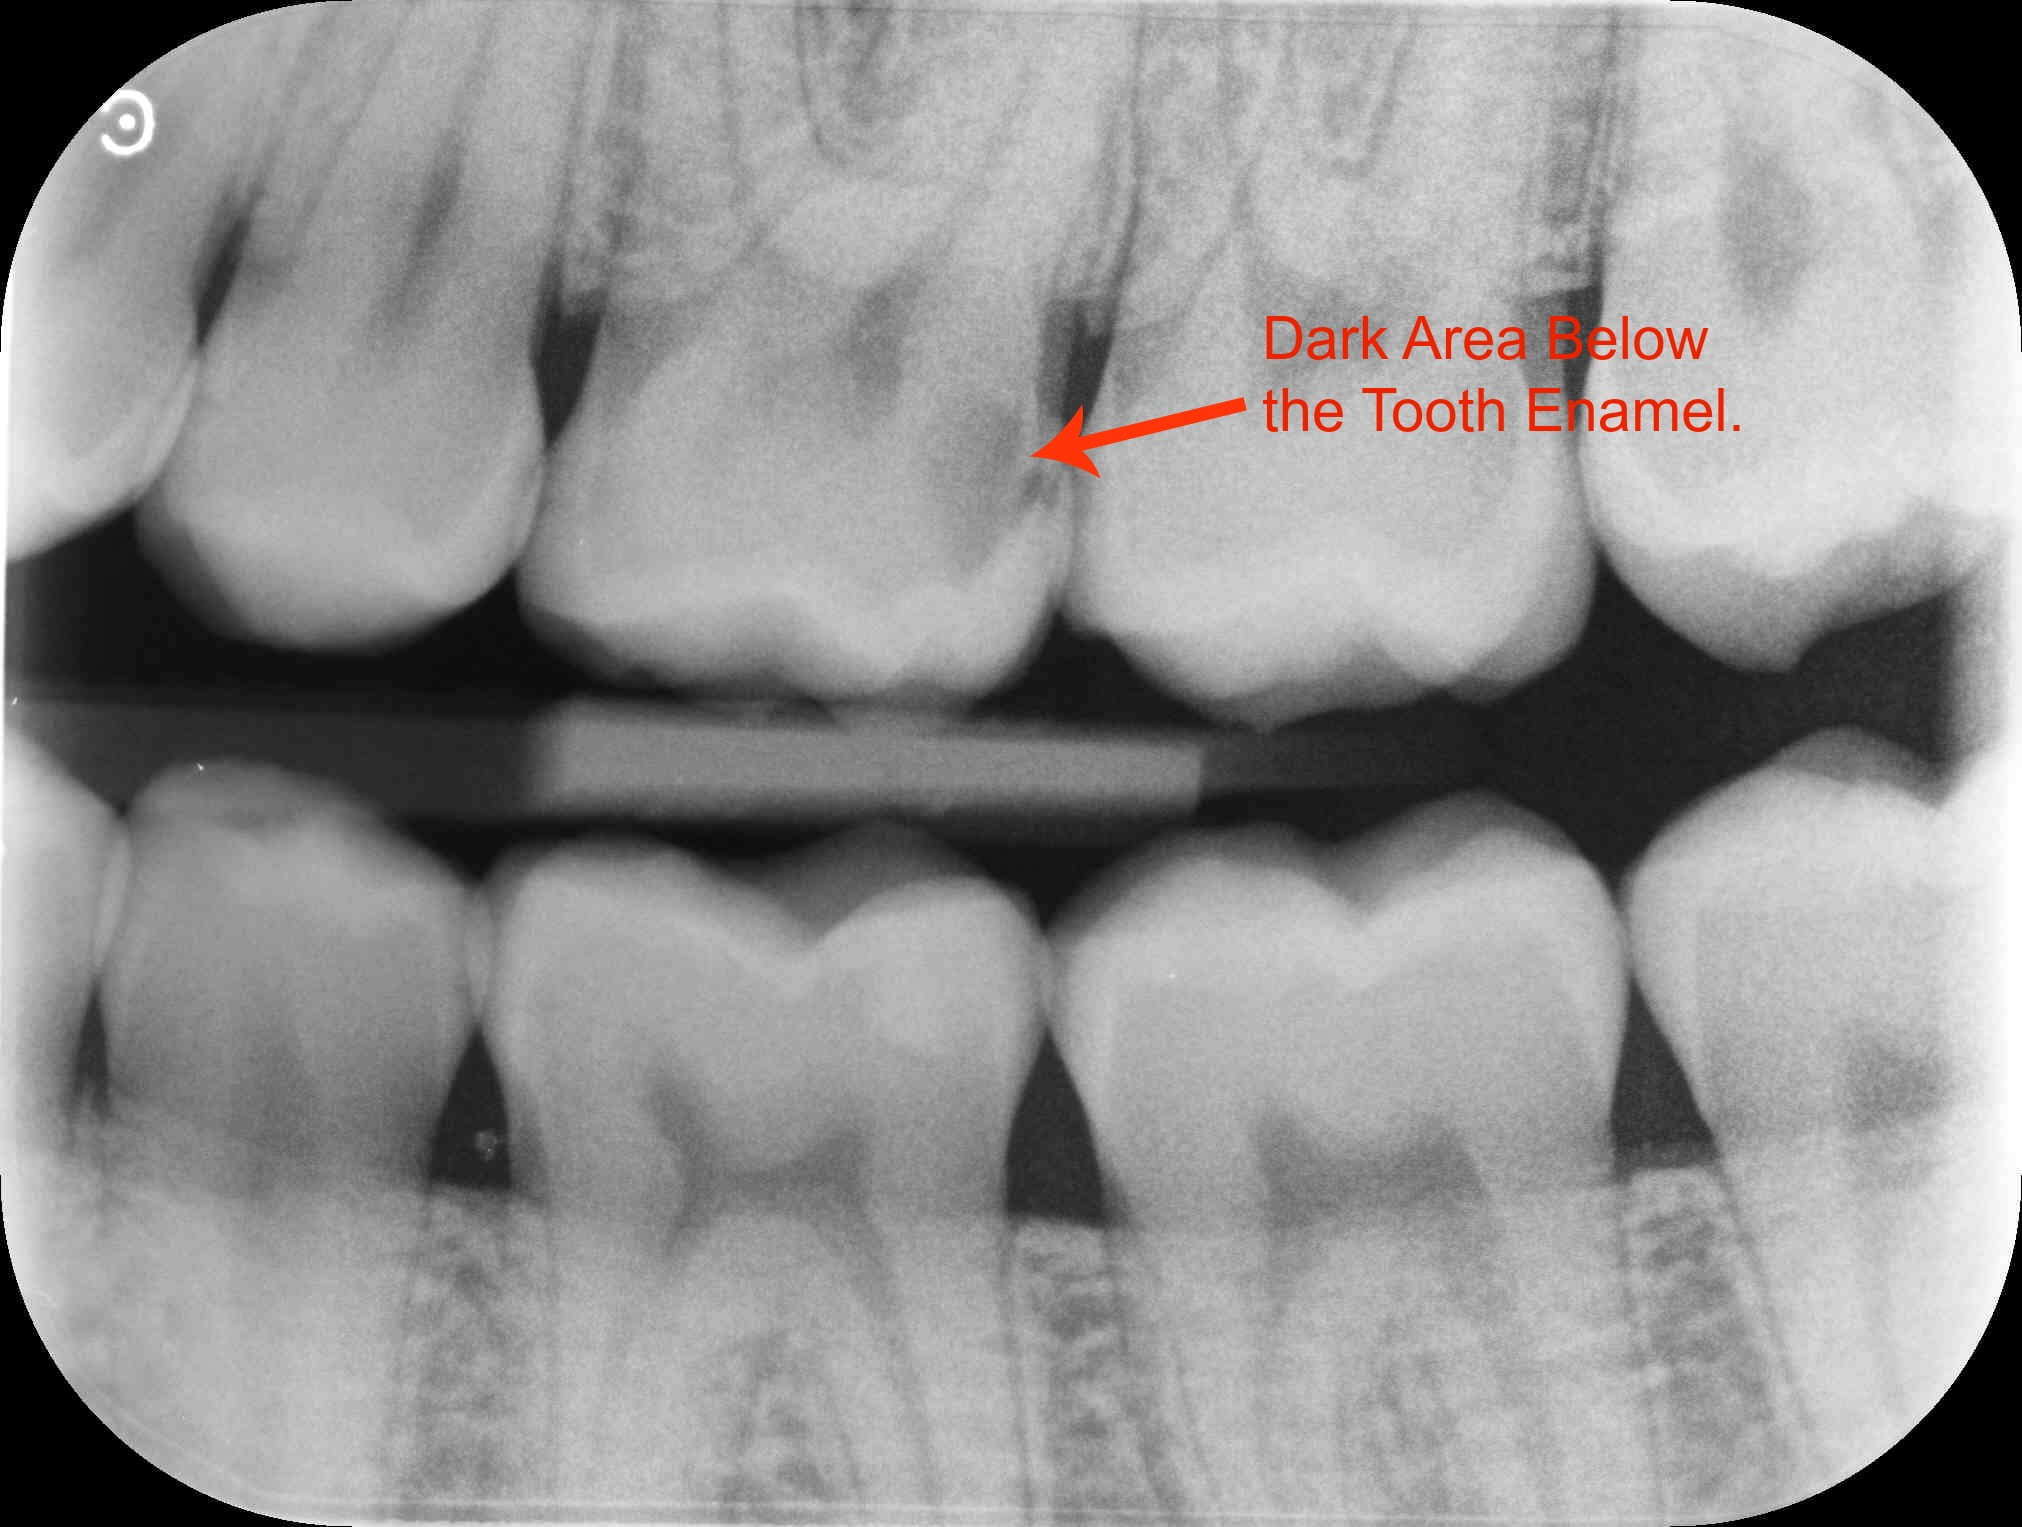 Tooth Cavity Xray